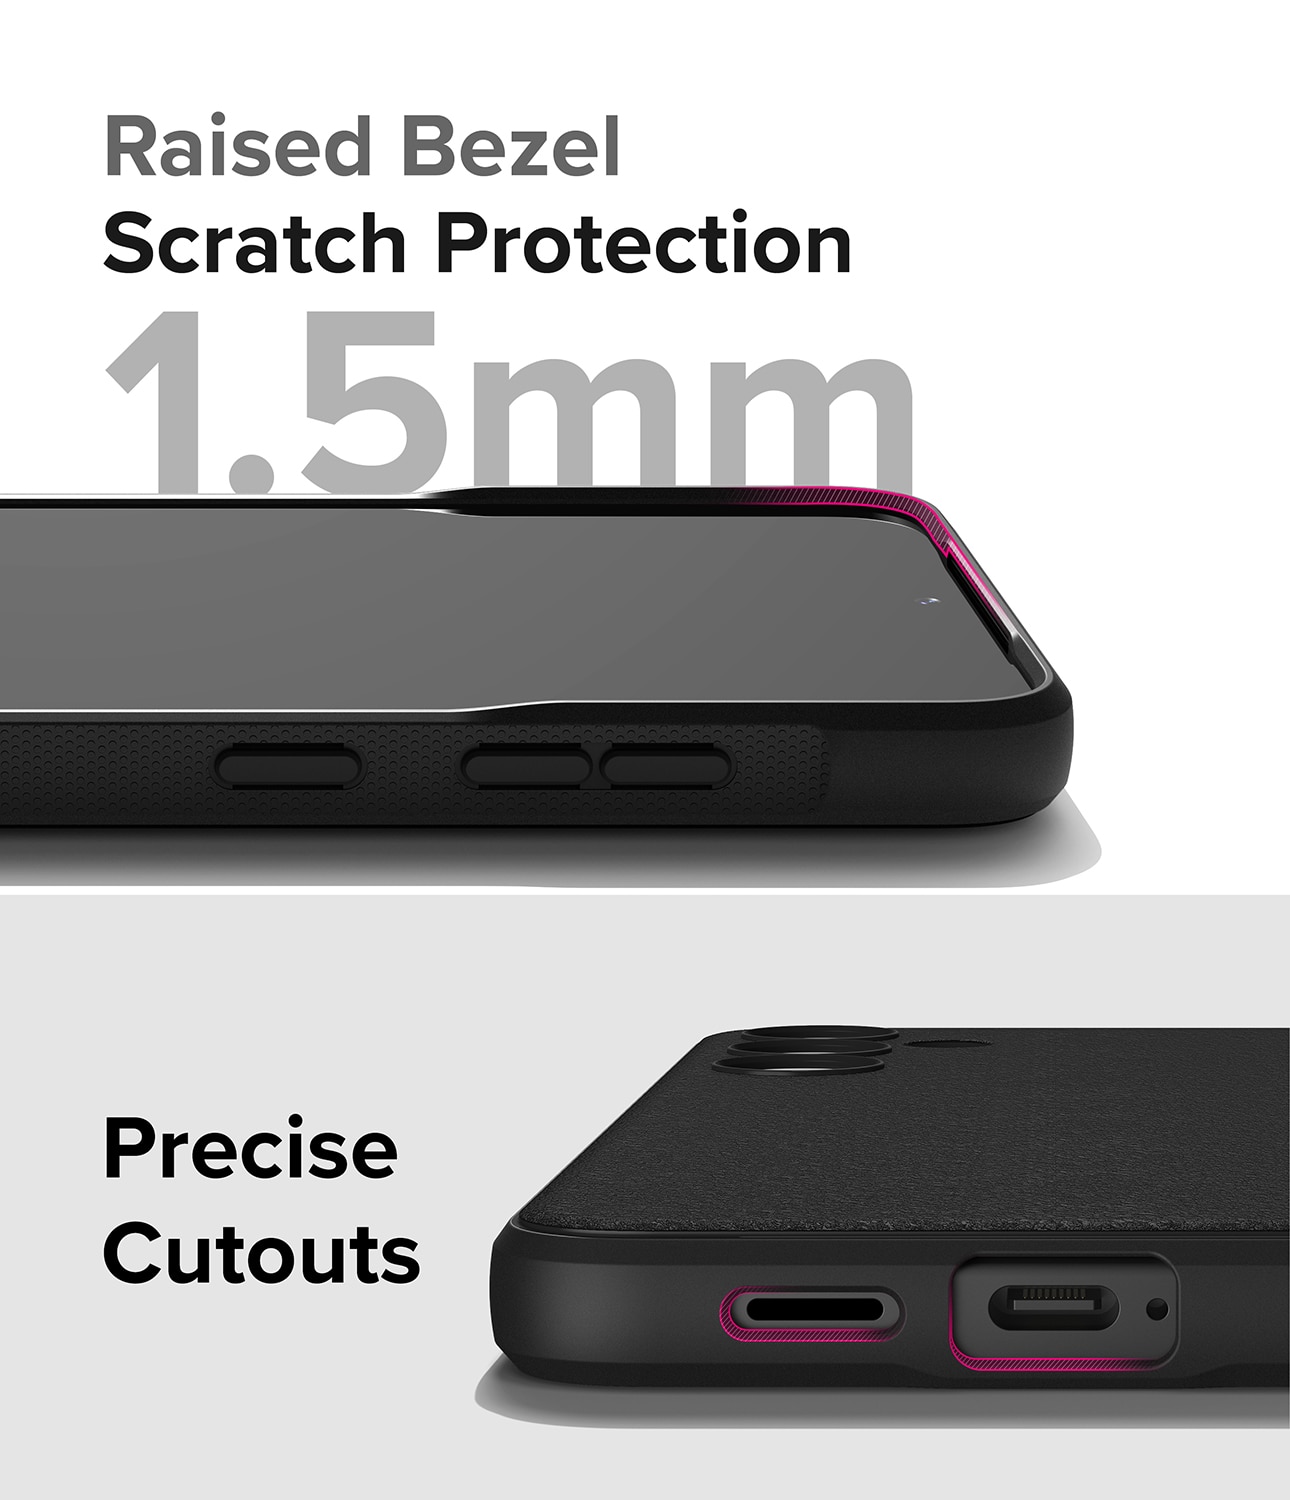 Samsung Galaxy S24 Plus Onyx Case Black